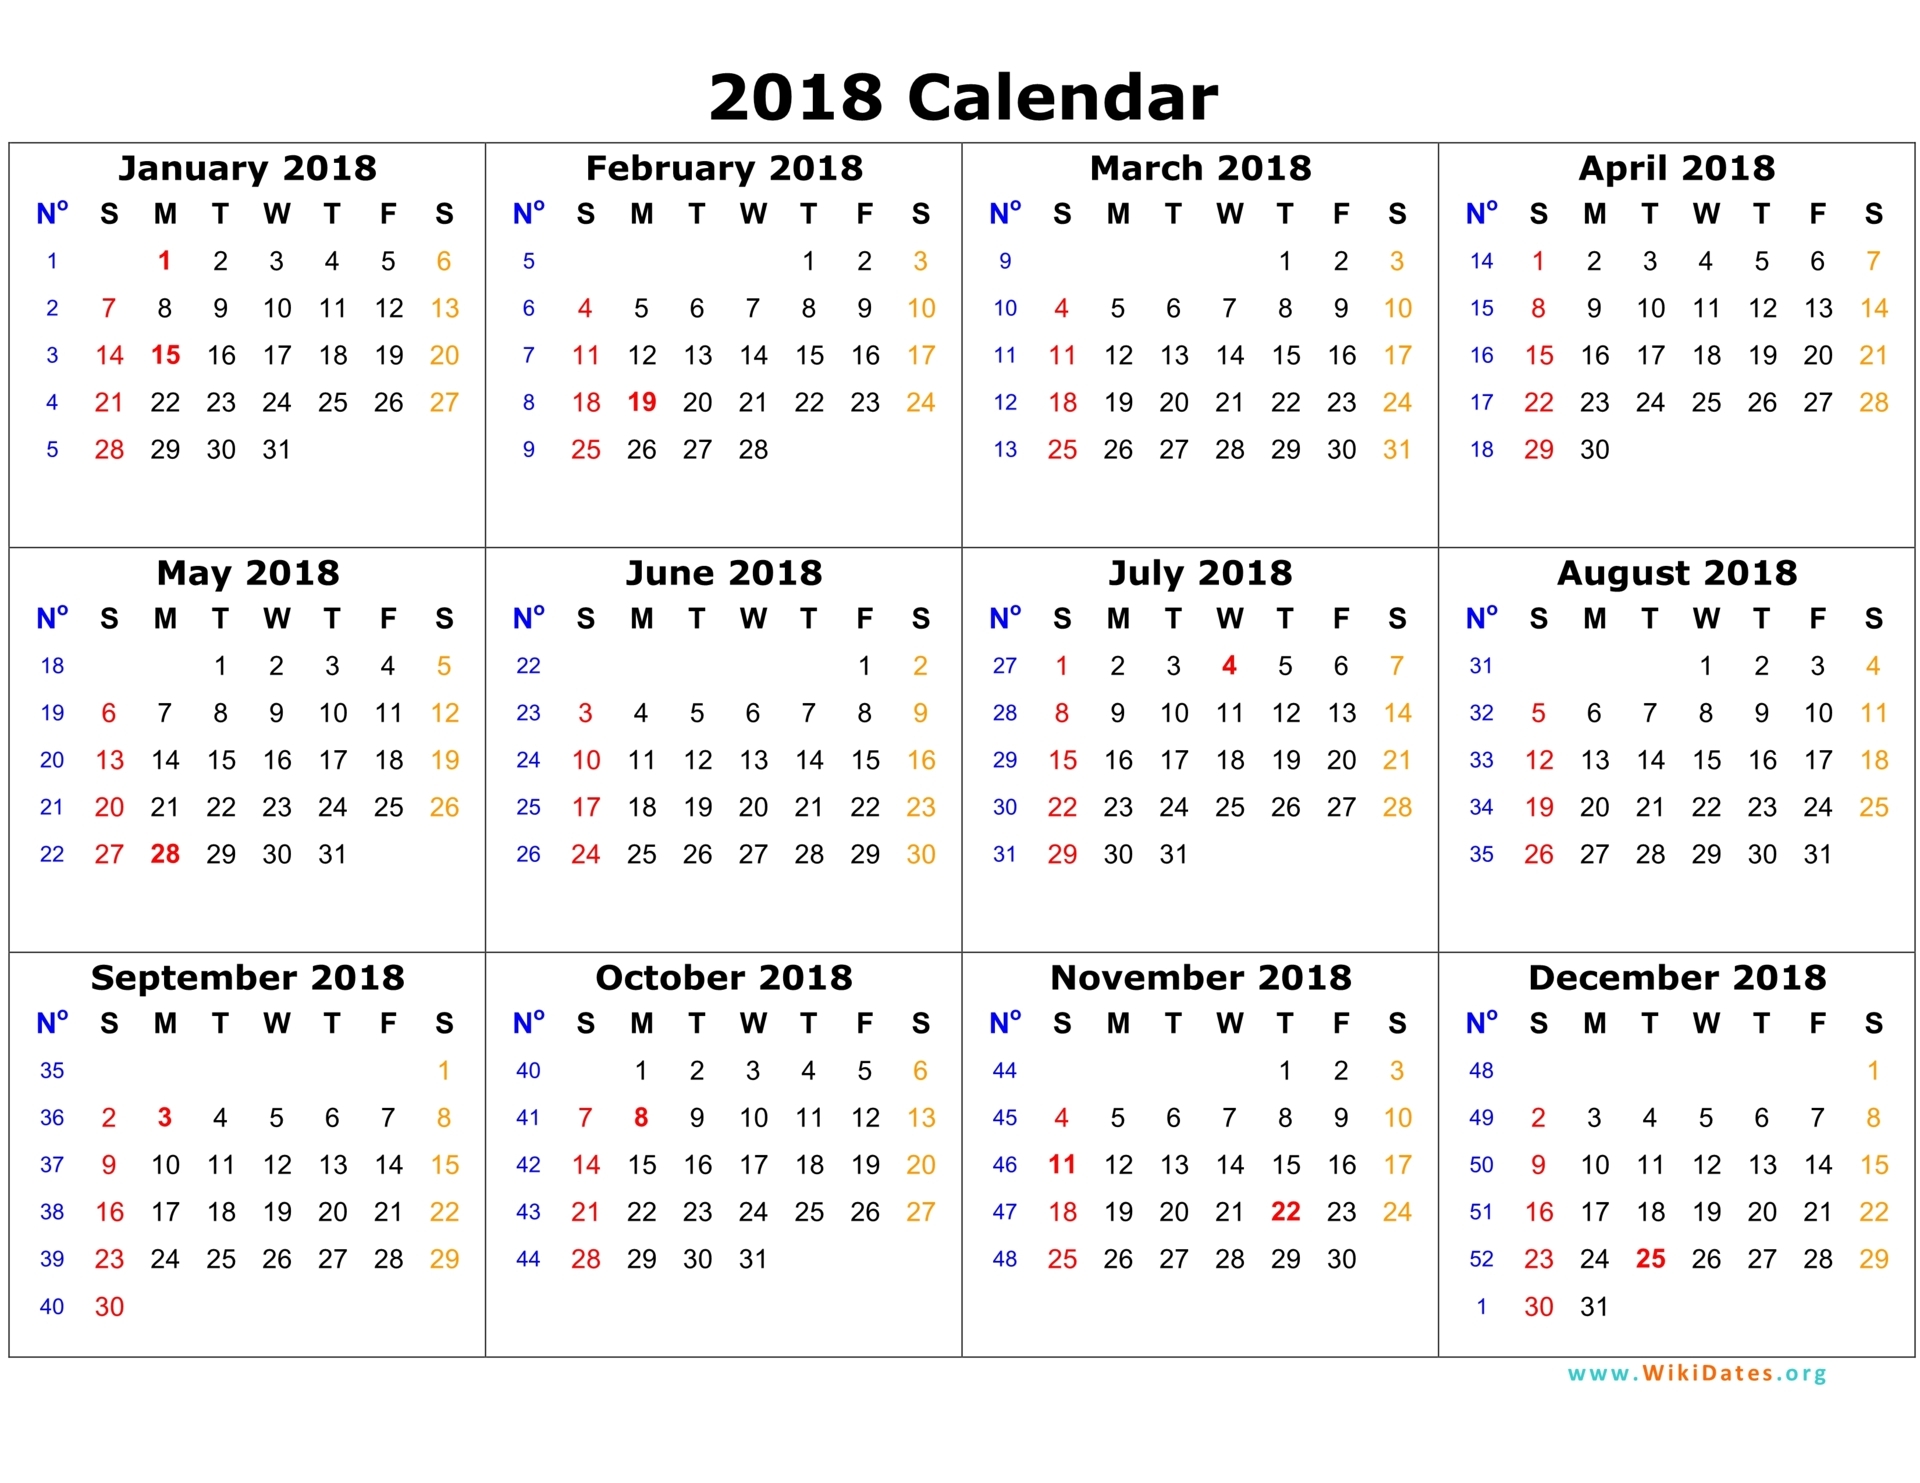 2018 Calendar WikiDatesorg 1920x1483